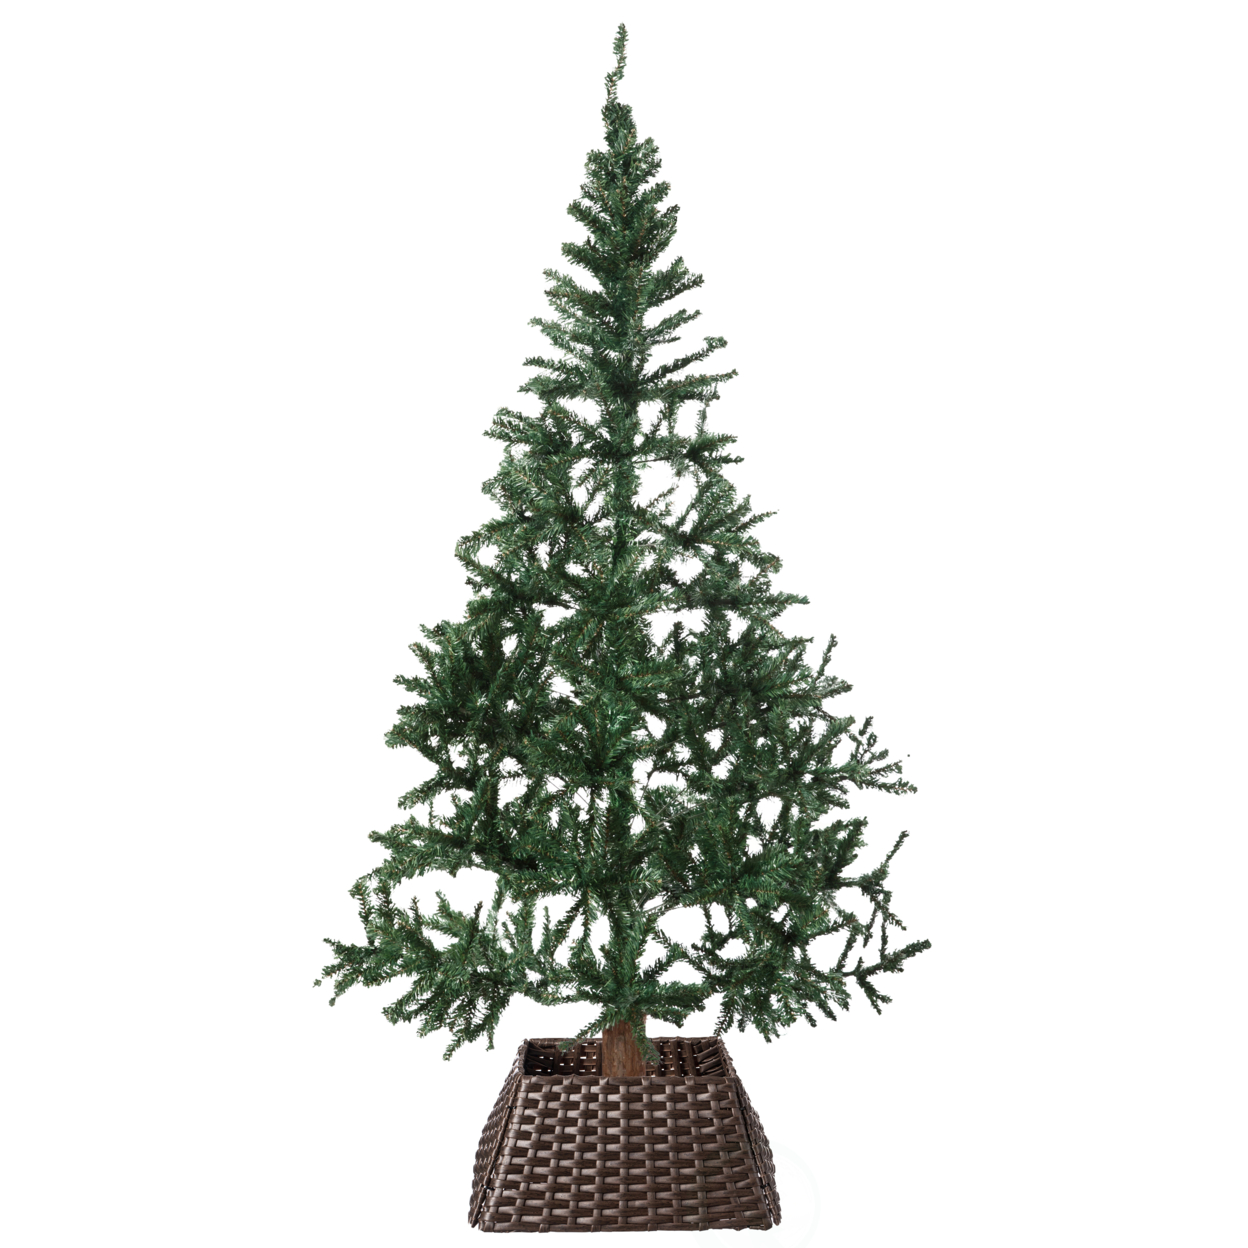 Foldable Christmas Tree Skirt Collar Basket, Ring Base Stand Cover, Rattan Plastic - Brown